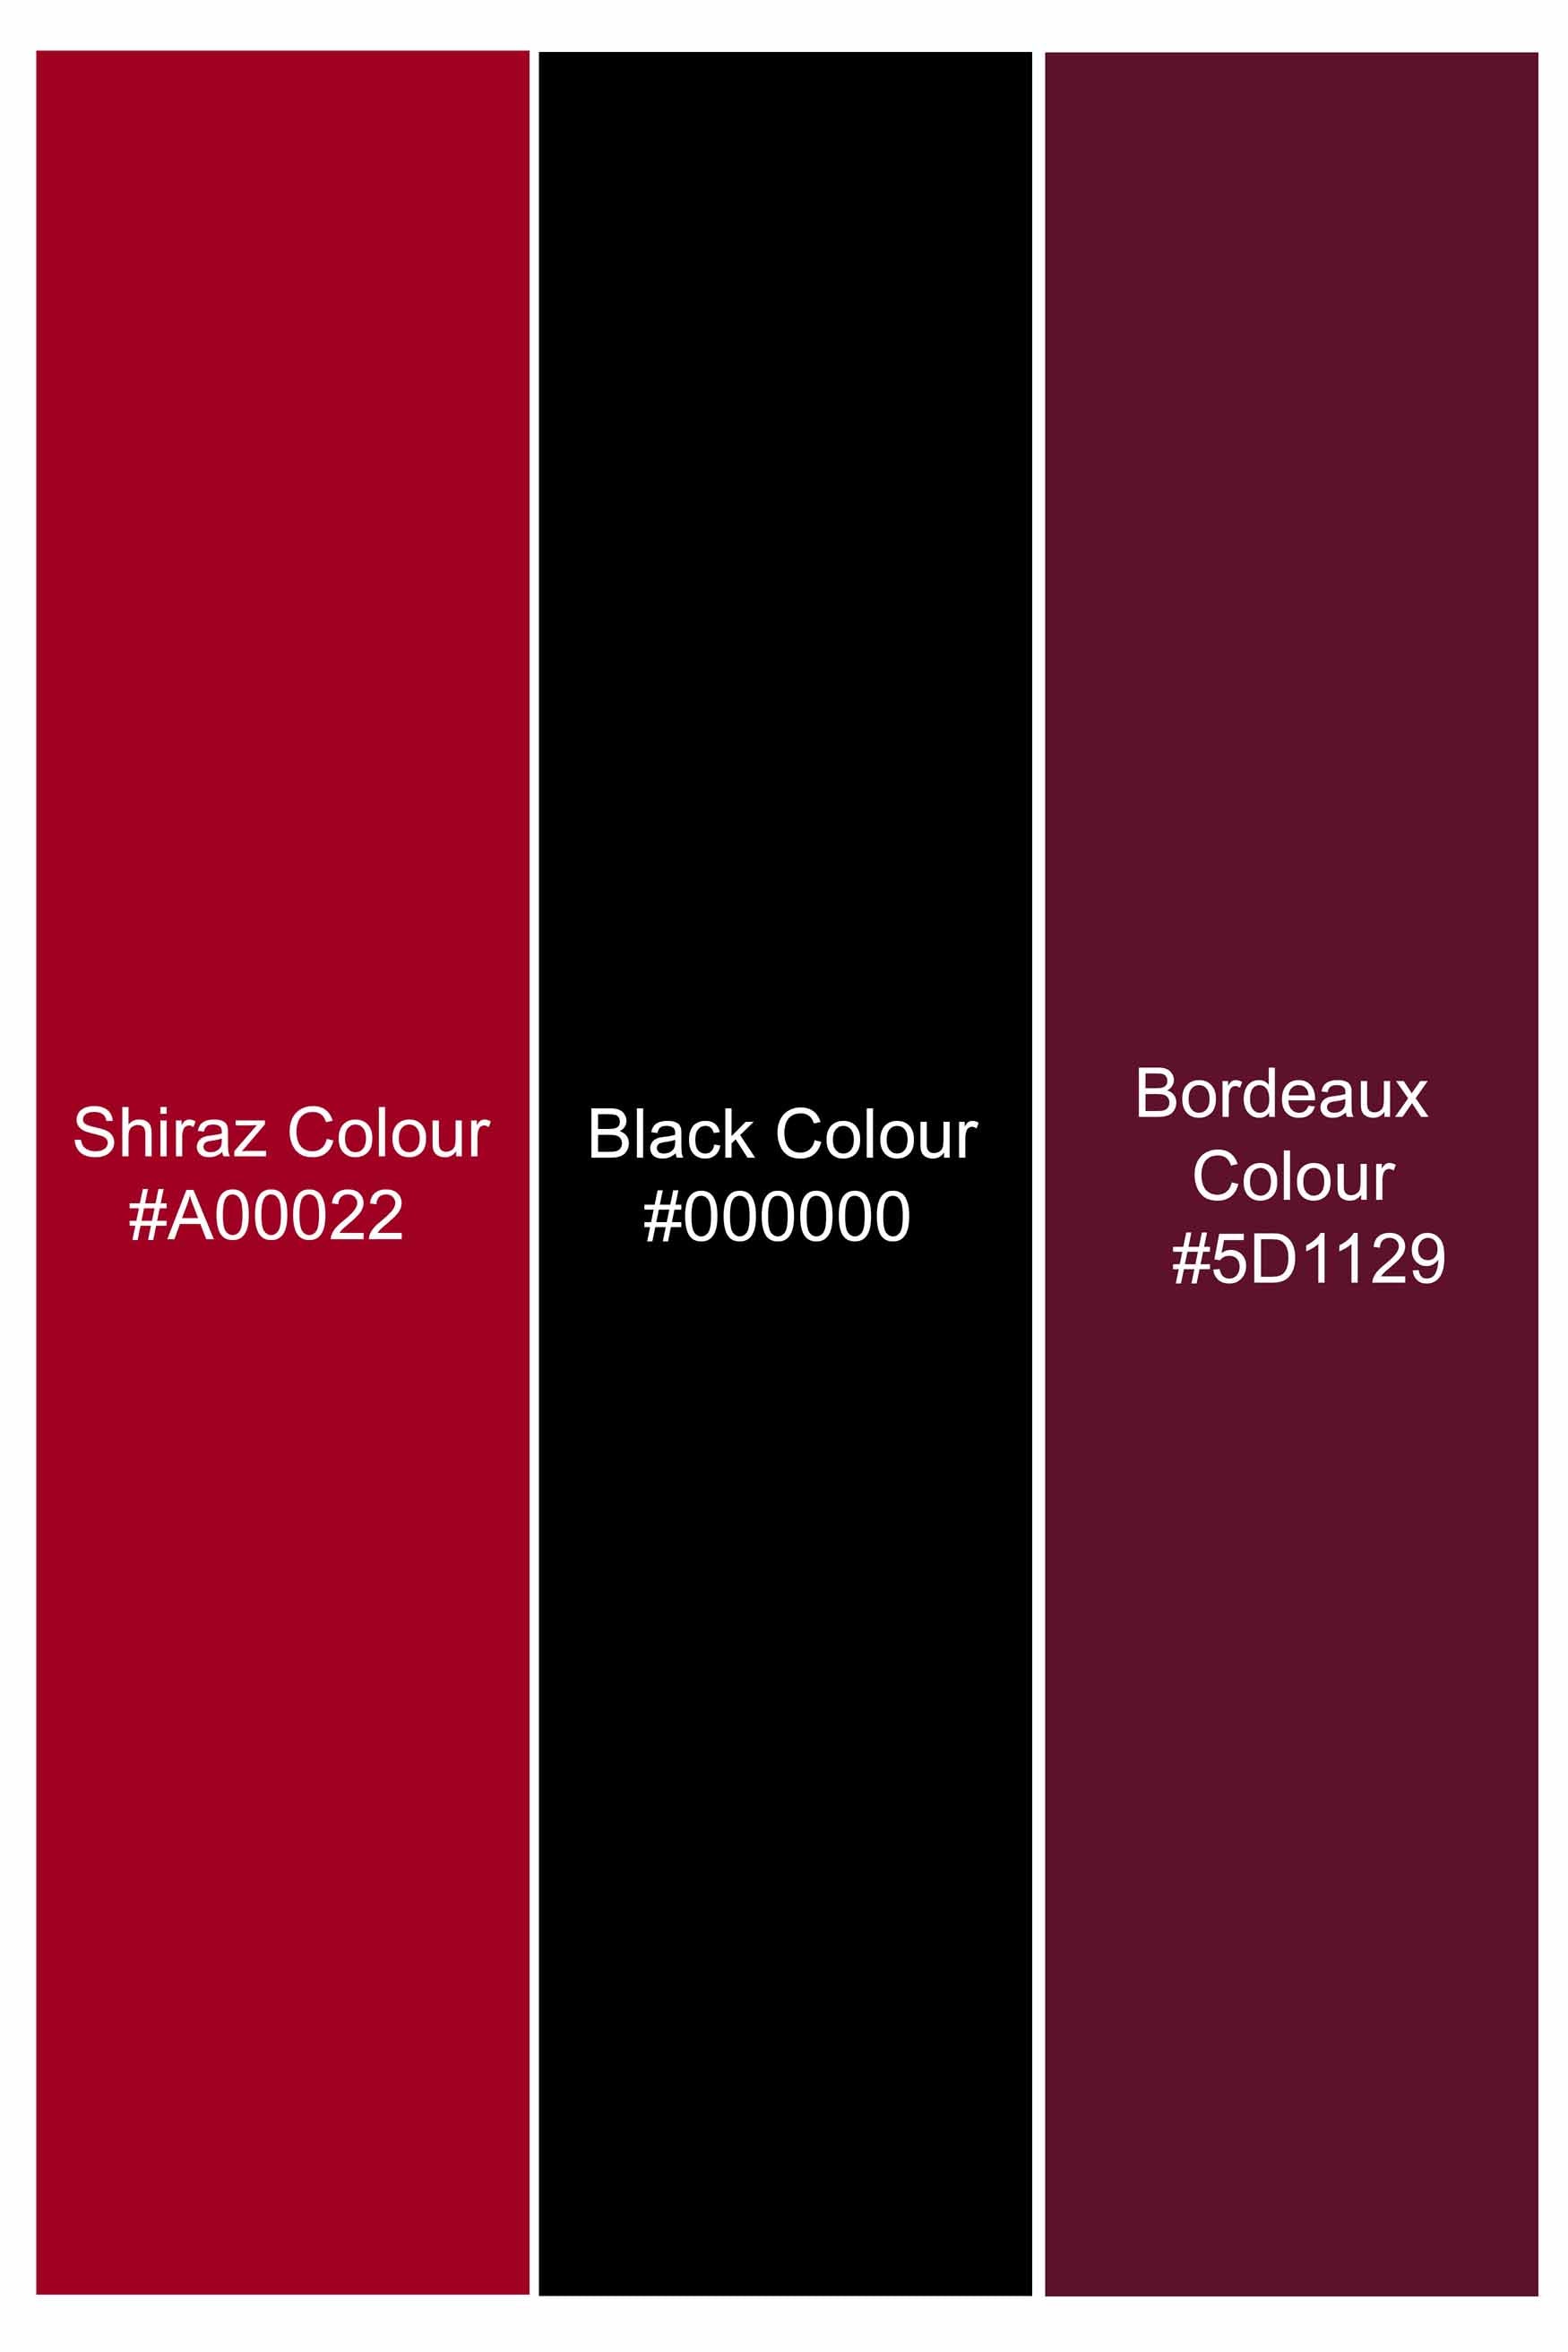 Shiraz Red and Black Twill Plaid Premium Cotton Shirt 11300-BD-38, 11300-BD-H-38, 11300-BD-39, 11300-BD-H-39, 11300-BD-40, 11300-BD-H-40, 11300-BD-42, 11300-BD-H-42, 11300-BD-44, 11300-BD-H-44, 11300-BD-46, 11300-BD-H-46, 11300-BD-48, 11300-BD-H-48, 11300-BD-50, 11300-BD-H-50, 11300-BD-52, 11300-BD-H-52